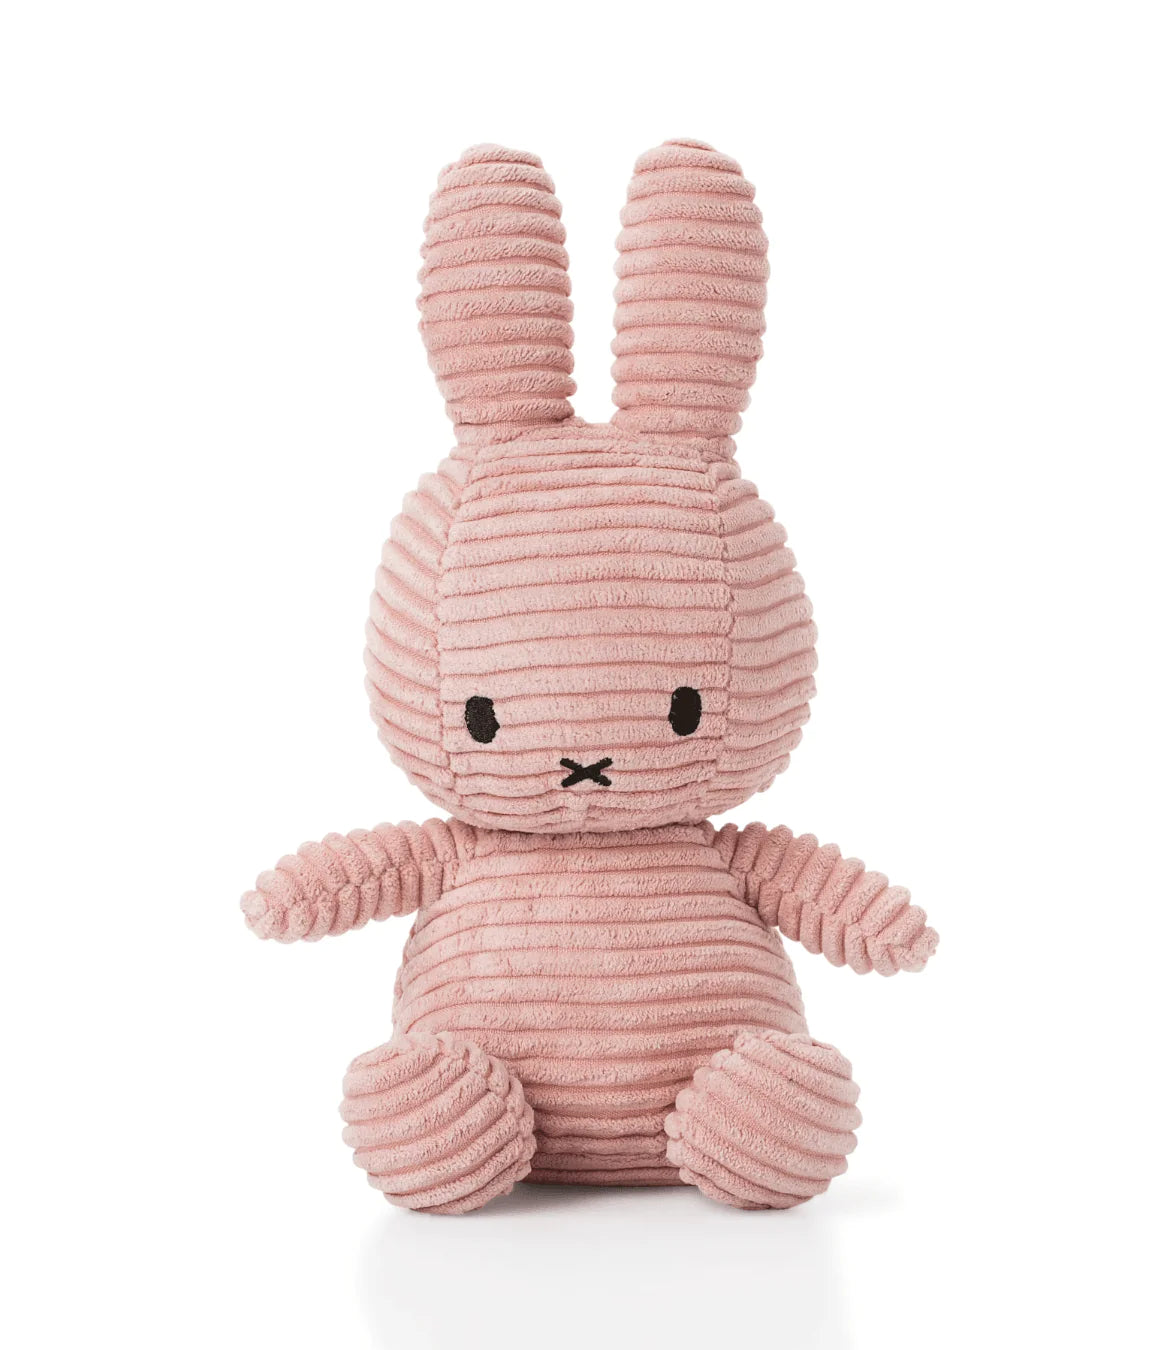 Miffy Corduroy Pink 23cm Plush Soft Toy